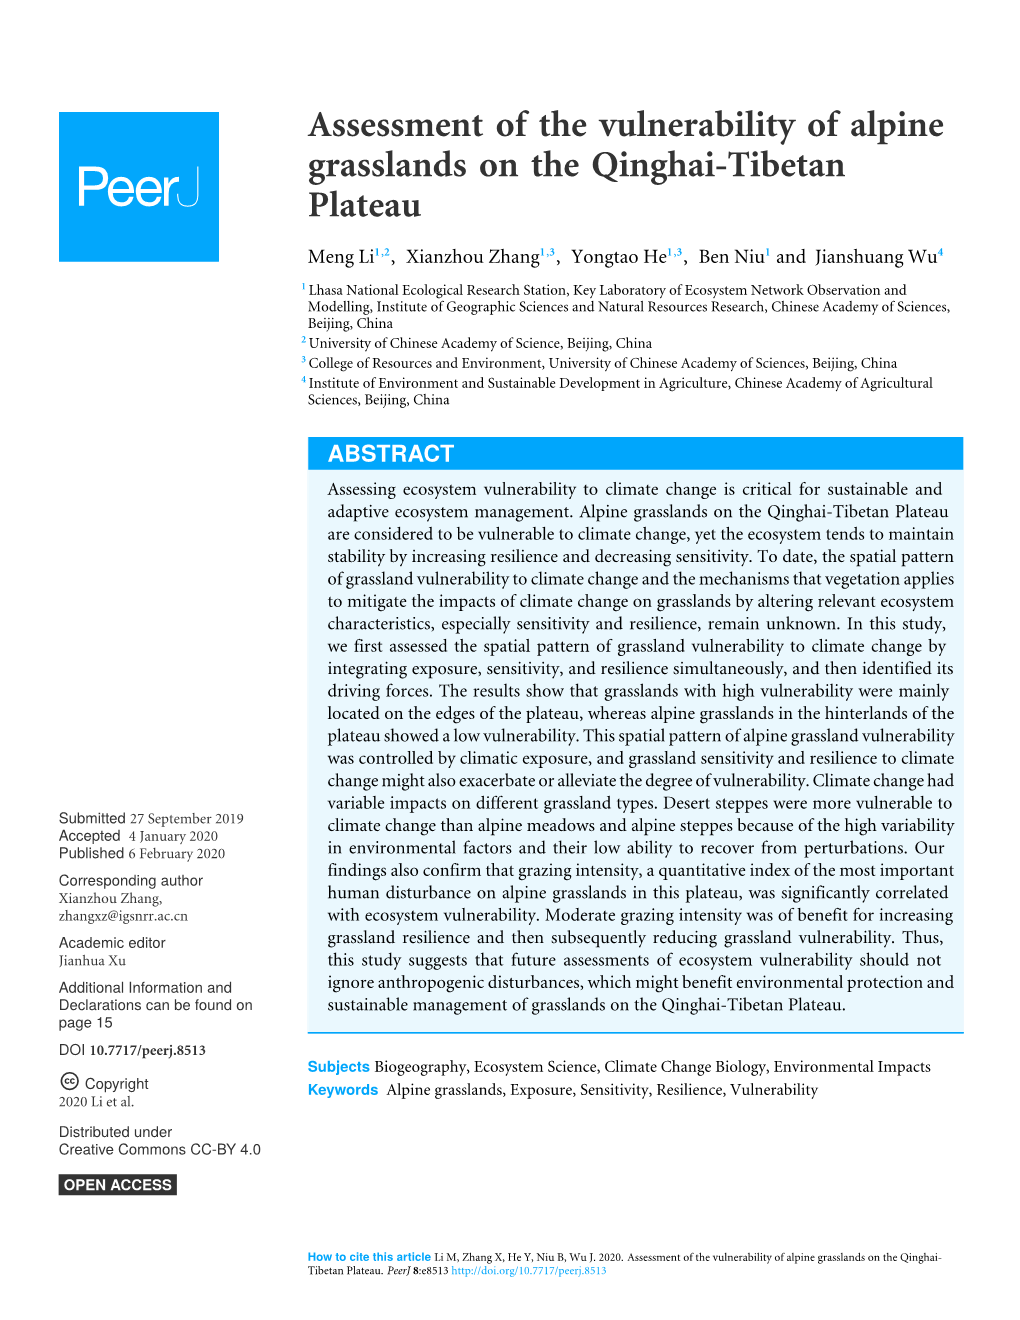 Assessment of the Vulnerability of Alpine Grasslands on the Qinghai-Tibetan Plateau